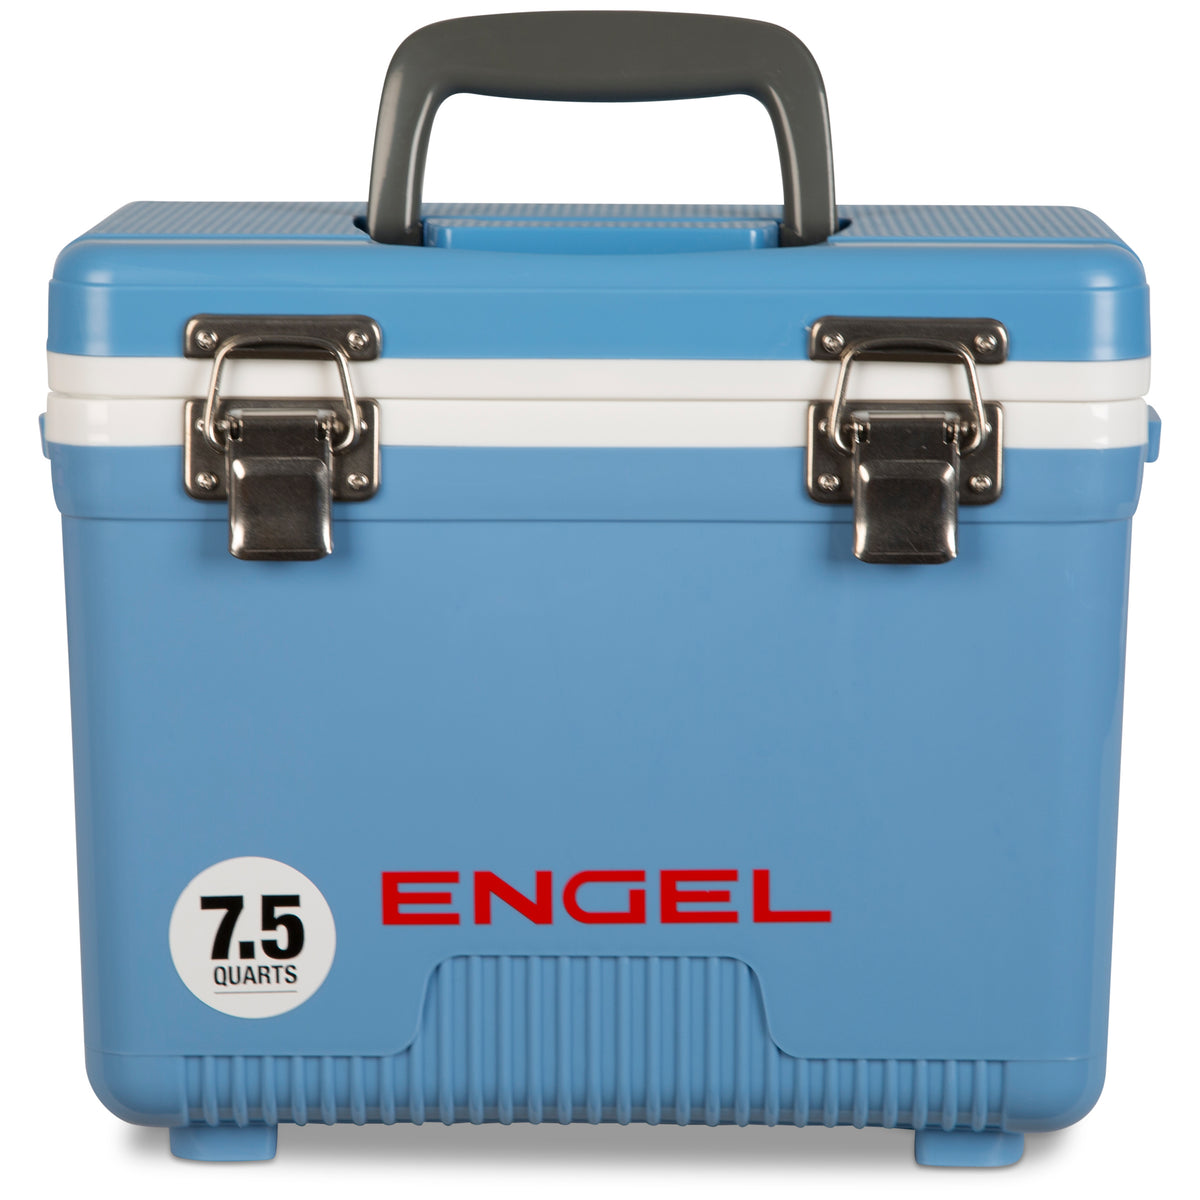 Engel 7.5 Quart Drybox/Cooler - Blue